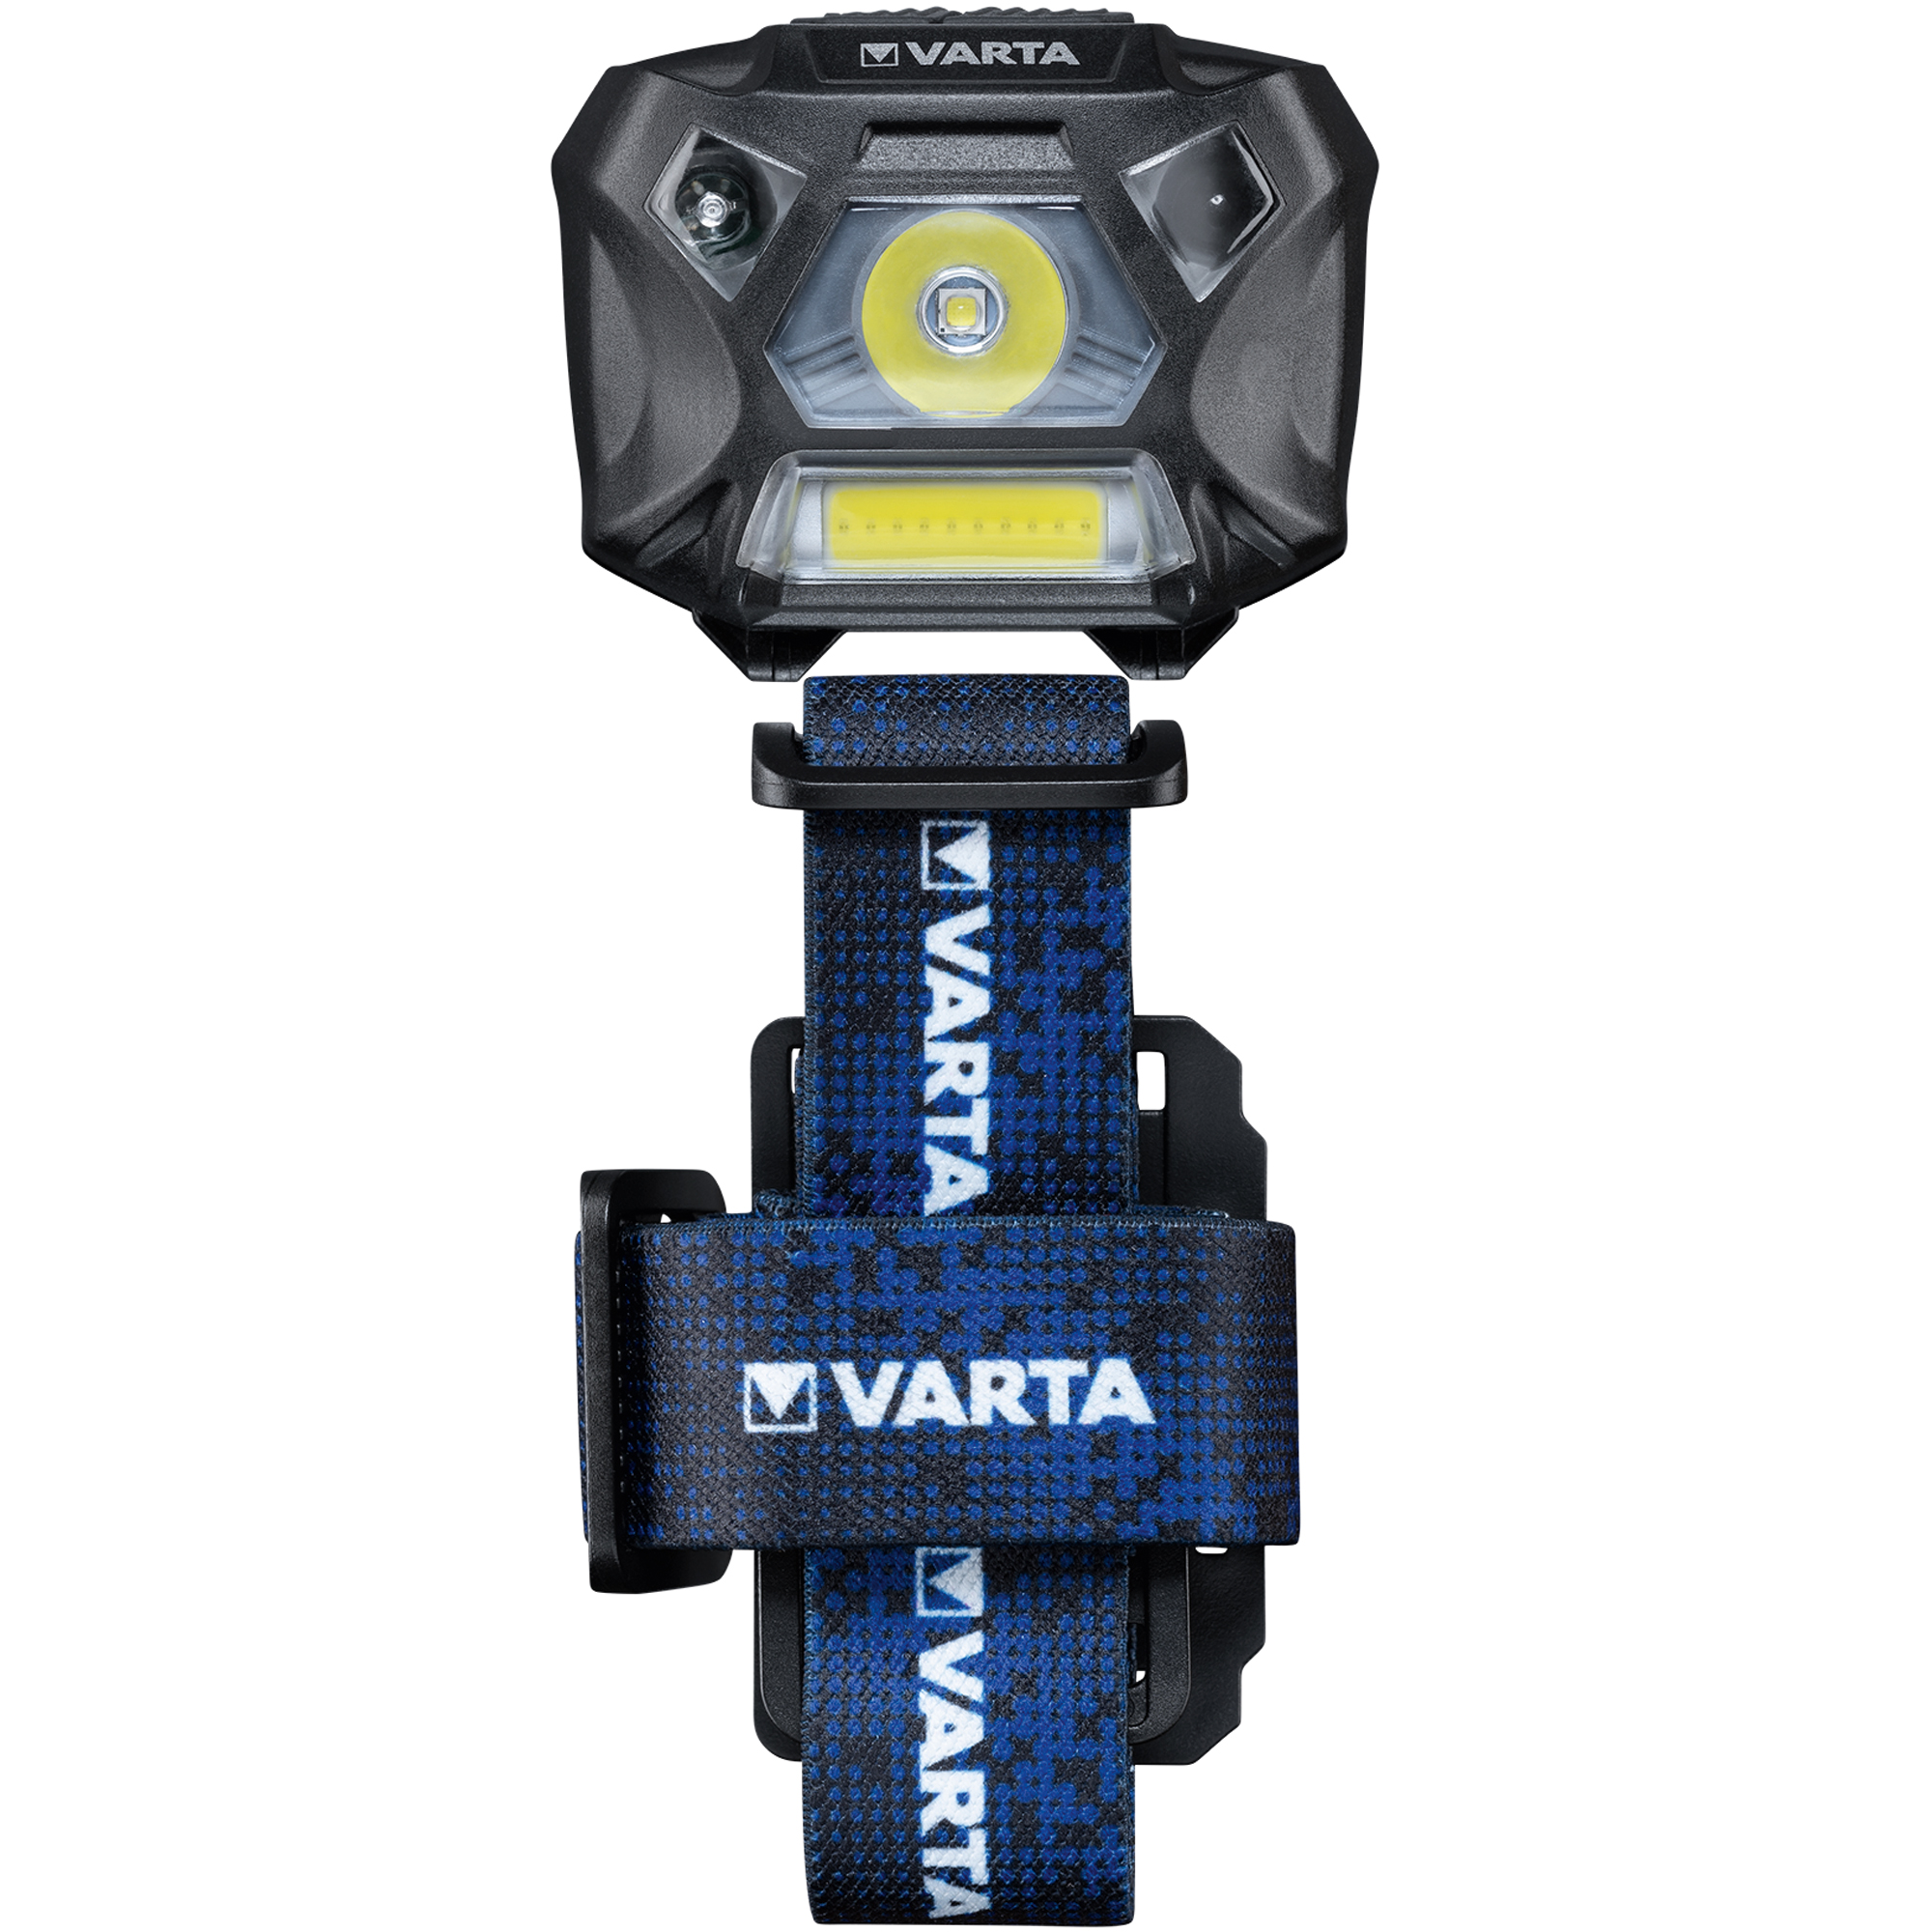 Varta Stirnlampe Work Flex Motion Sensor H20 18648101421 150lm